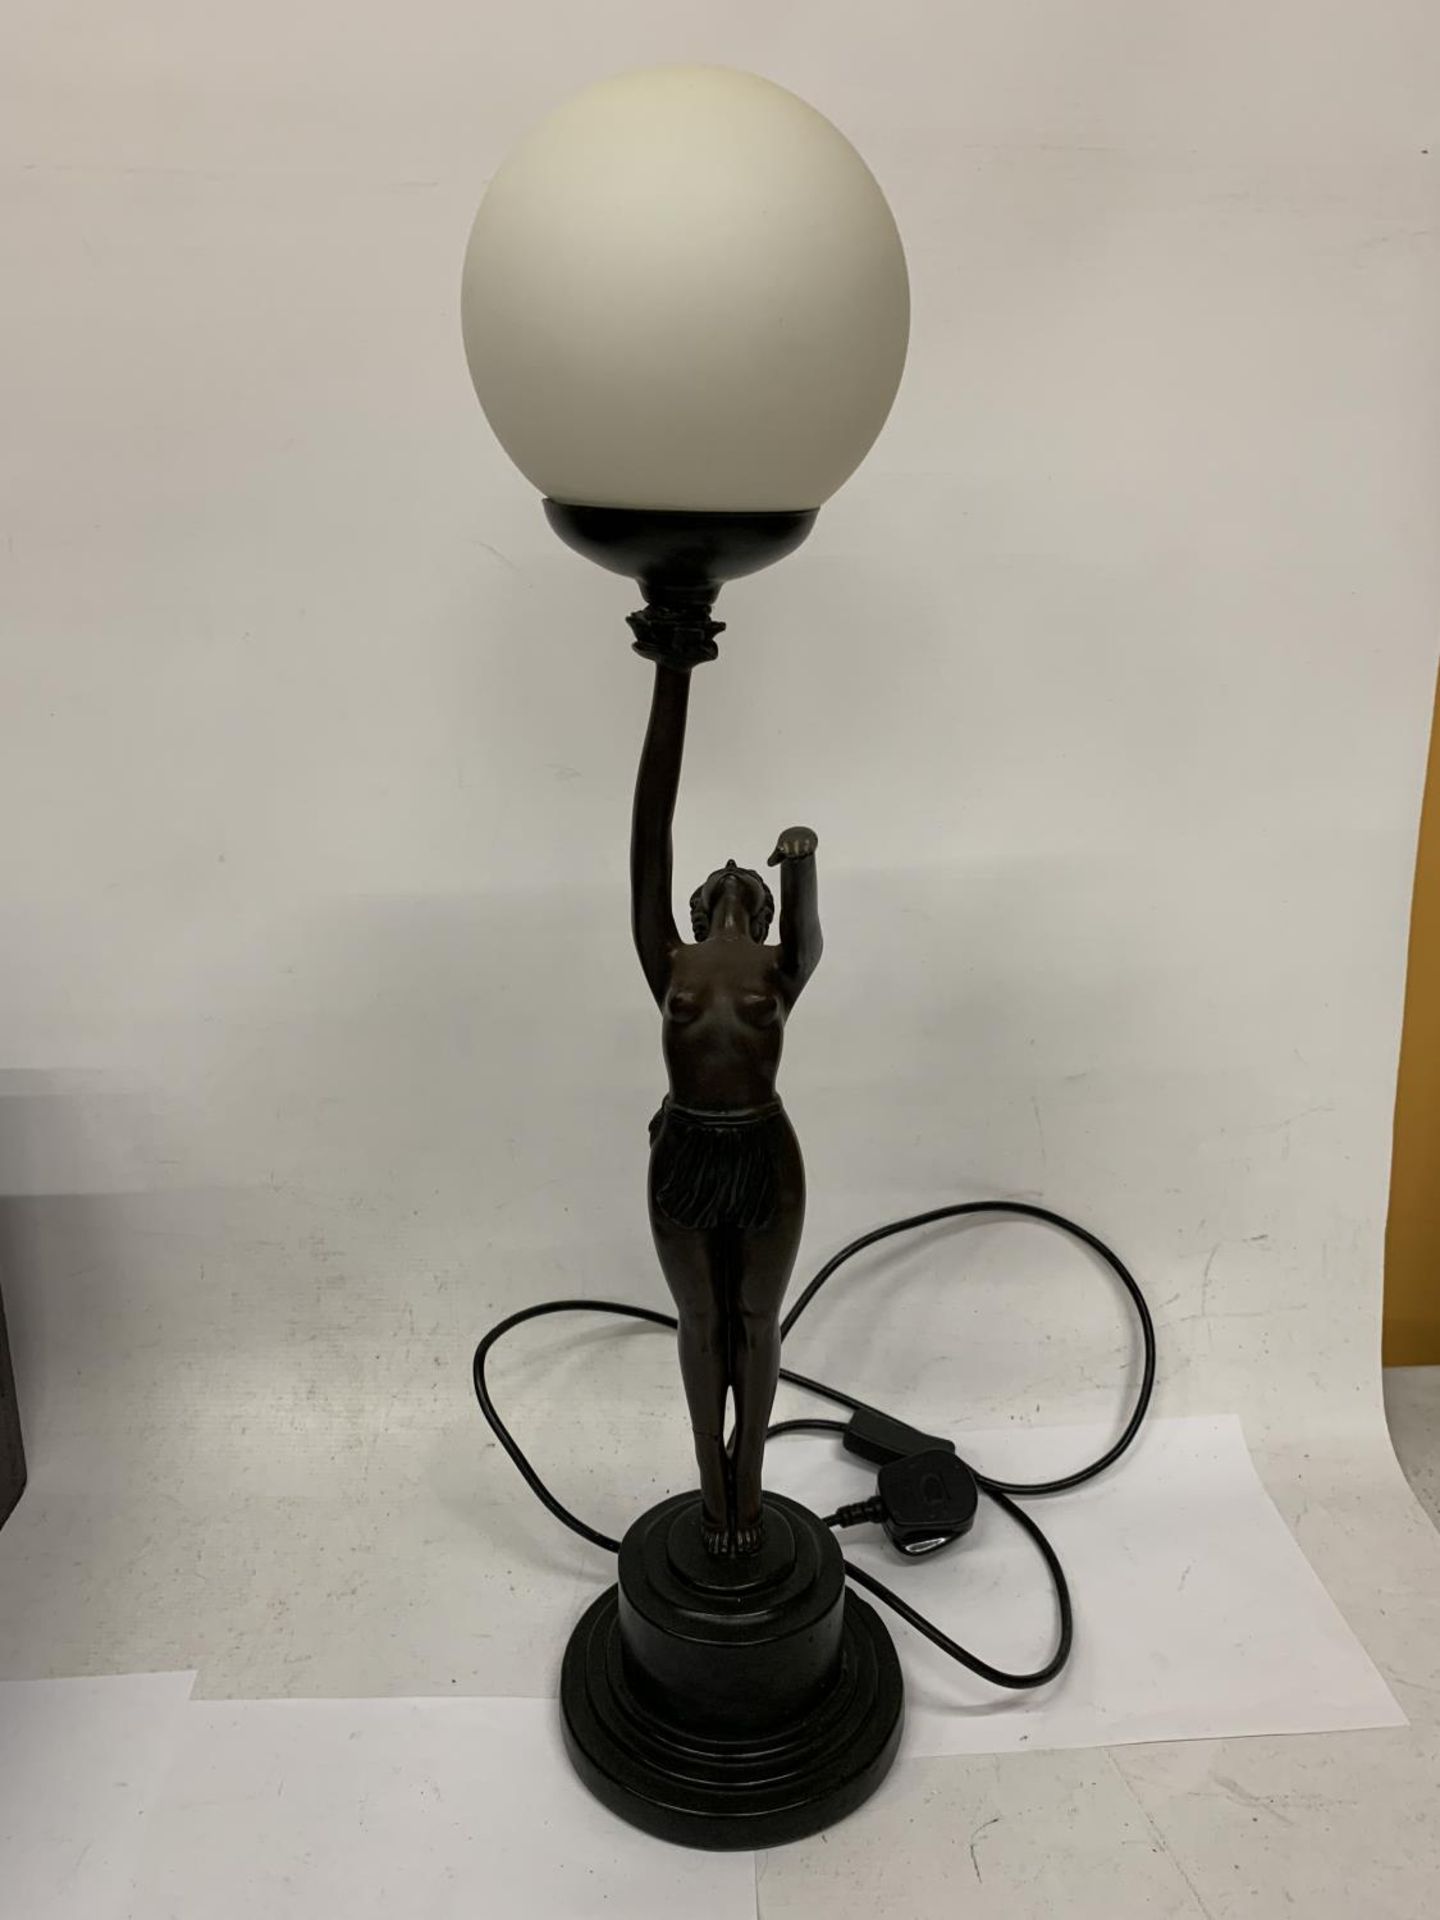 AN ART DECO BRONZE ART LAMP WITH SHADE - "NORA STANDING"